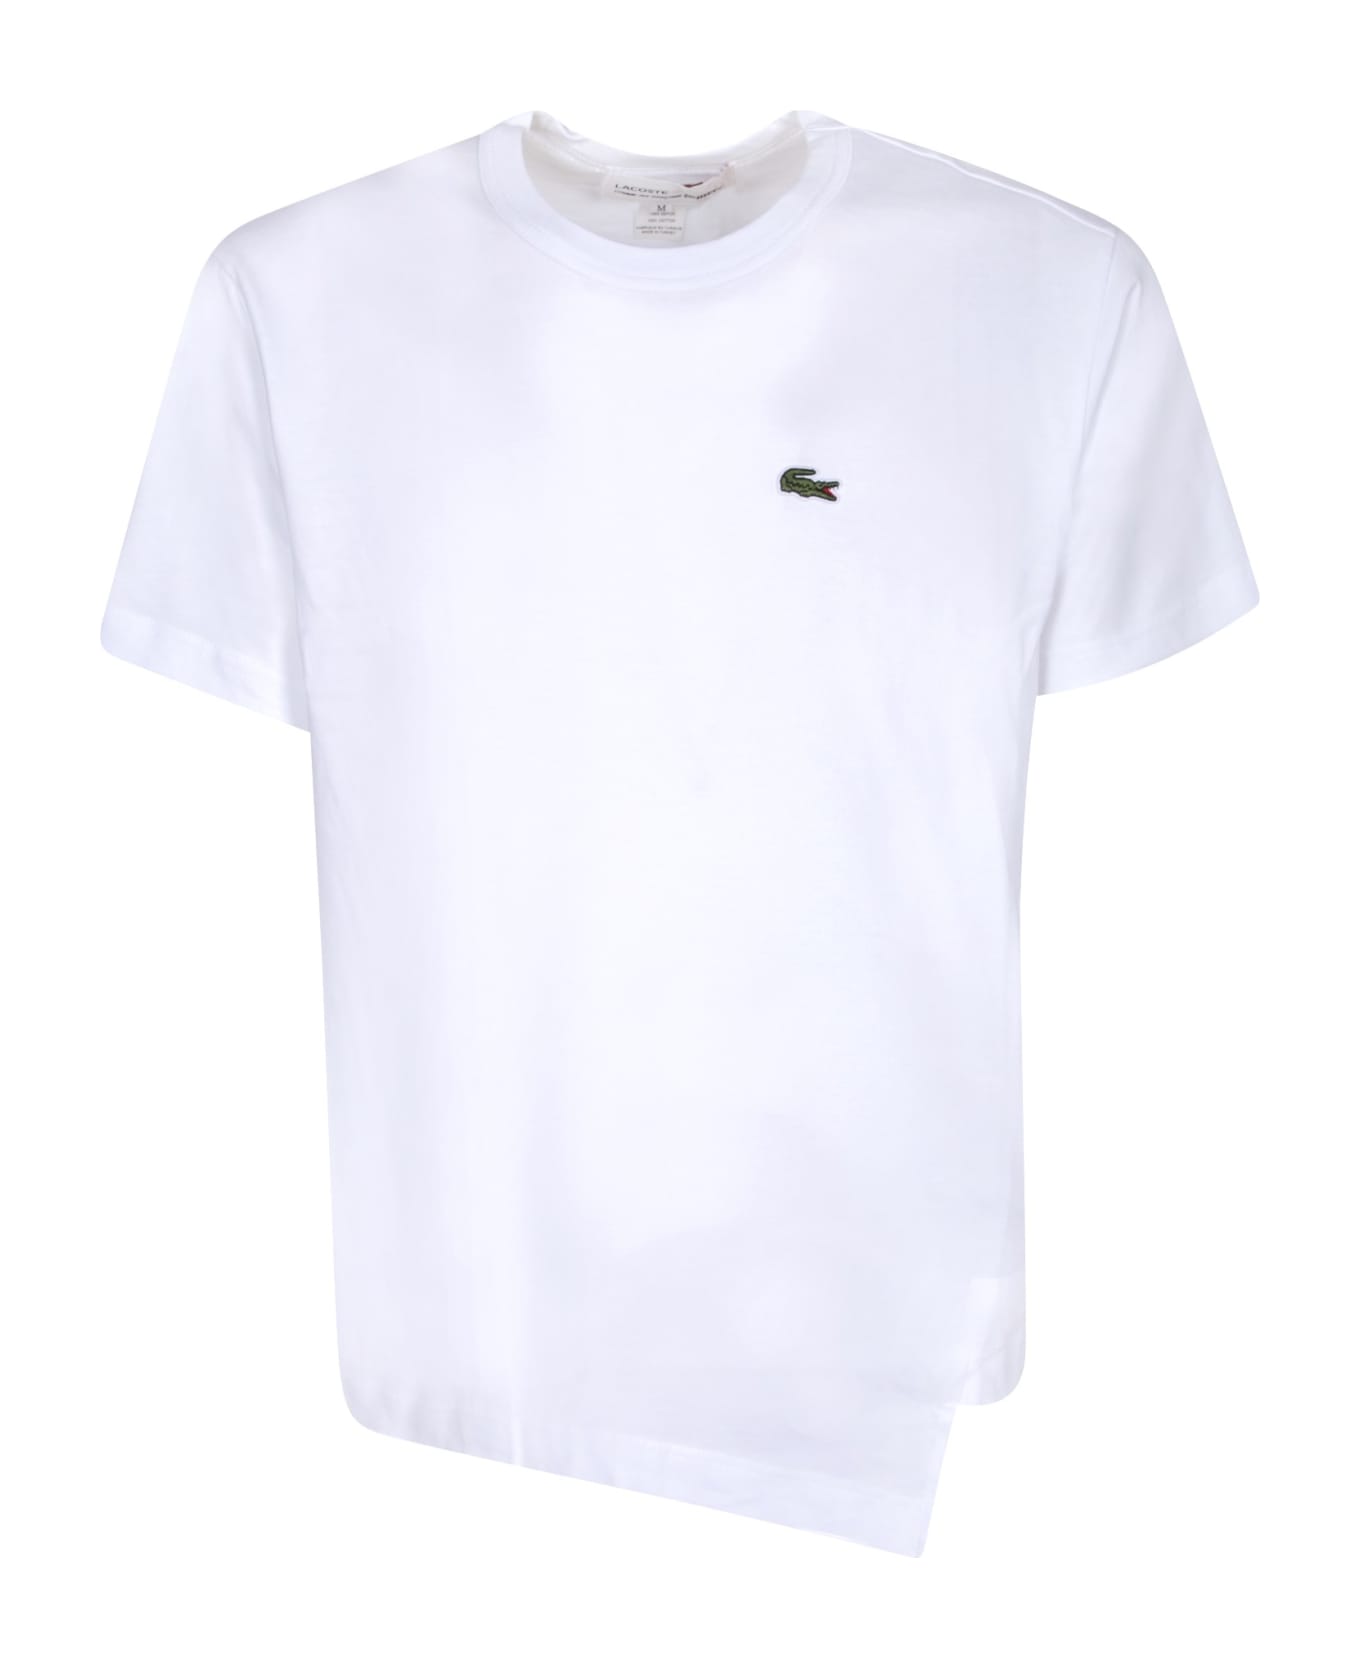 Comme des Garçons Shirt Asymmetric White T-shirt - White